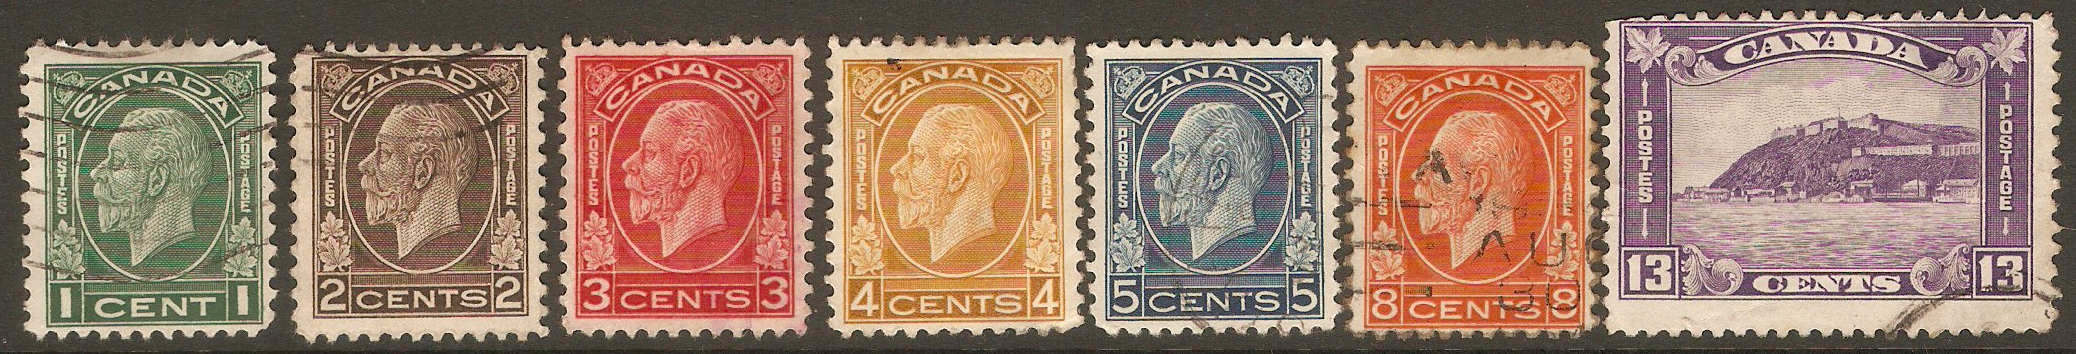 Canada 1932 King George V definitive set. SG319-SG325.